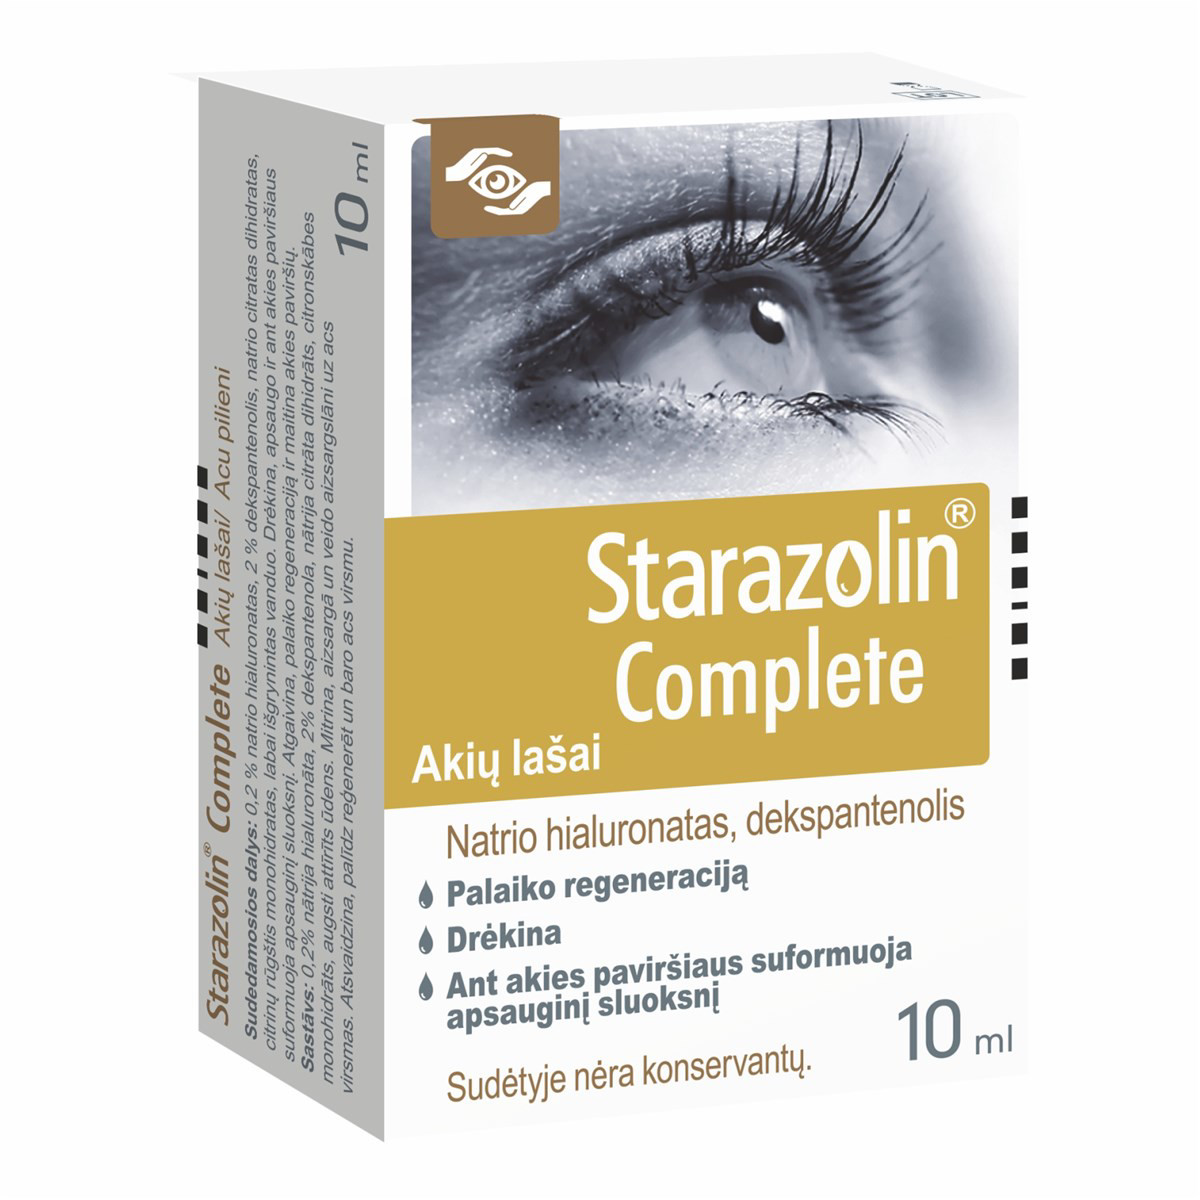 STARAZOLIN COMPLETE, akių lašai, 10 ml